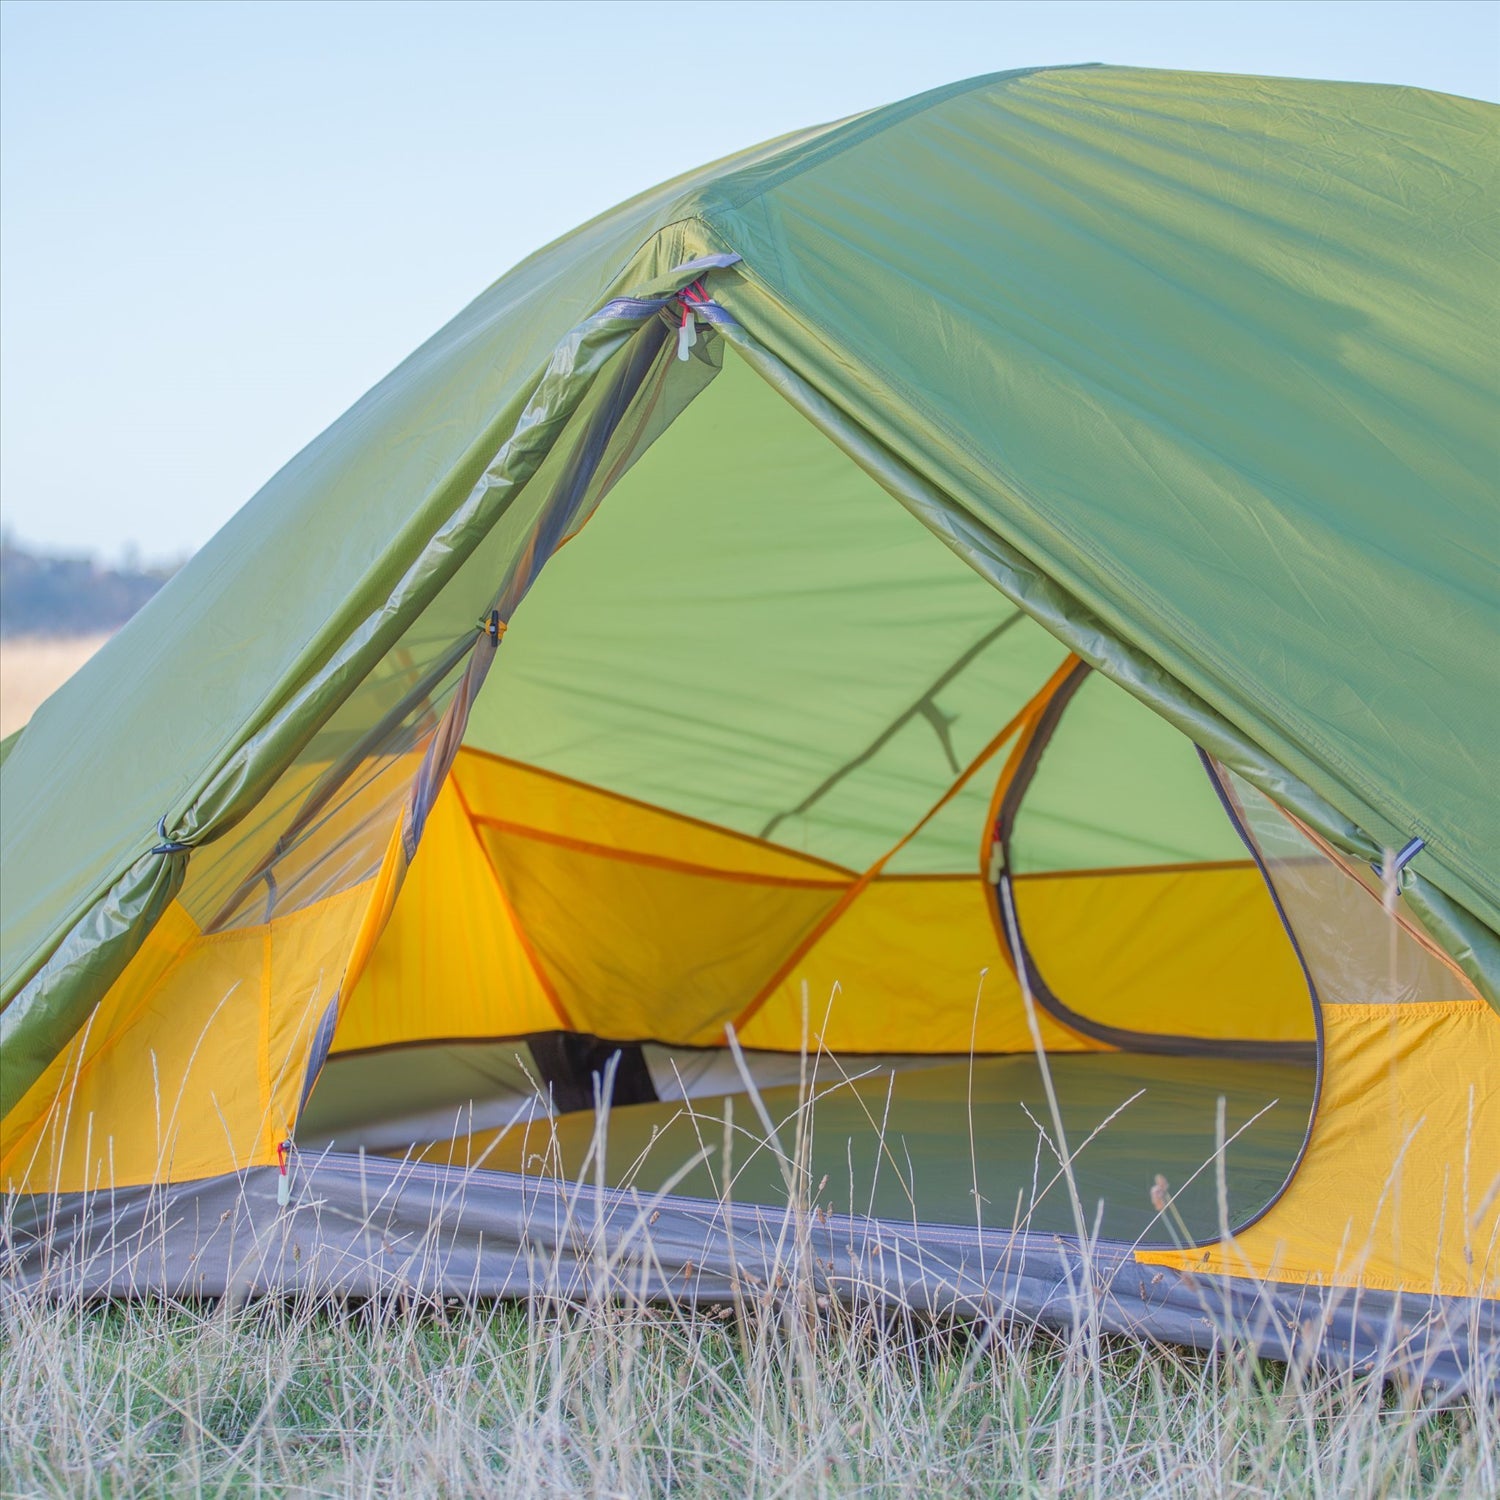 Orson Orson Hopper Pro 2 - Ripstop Silnylon 2 Person Hiking Tent 2.05kg